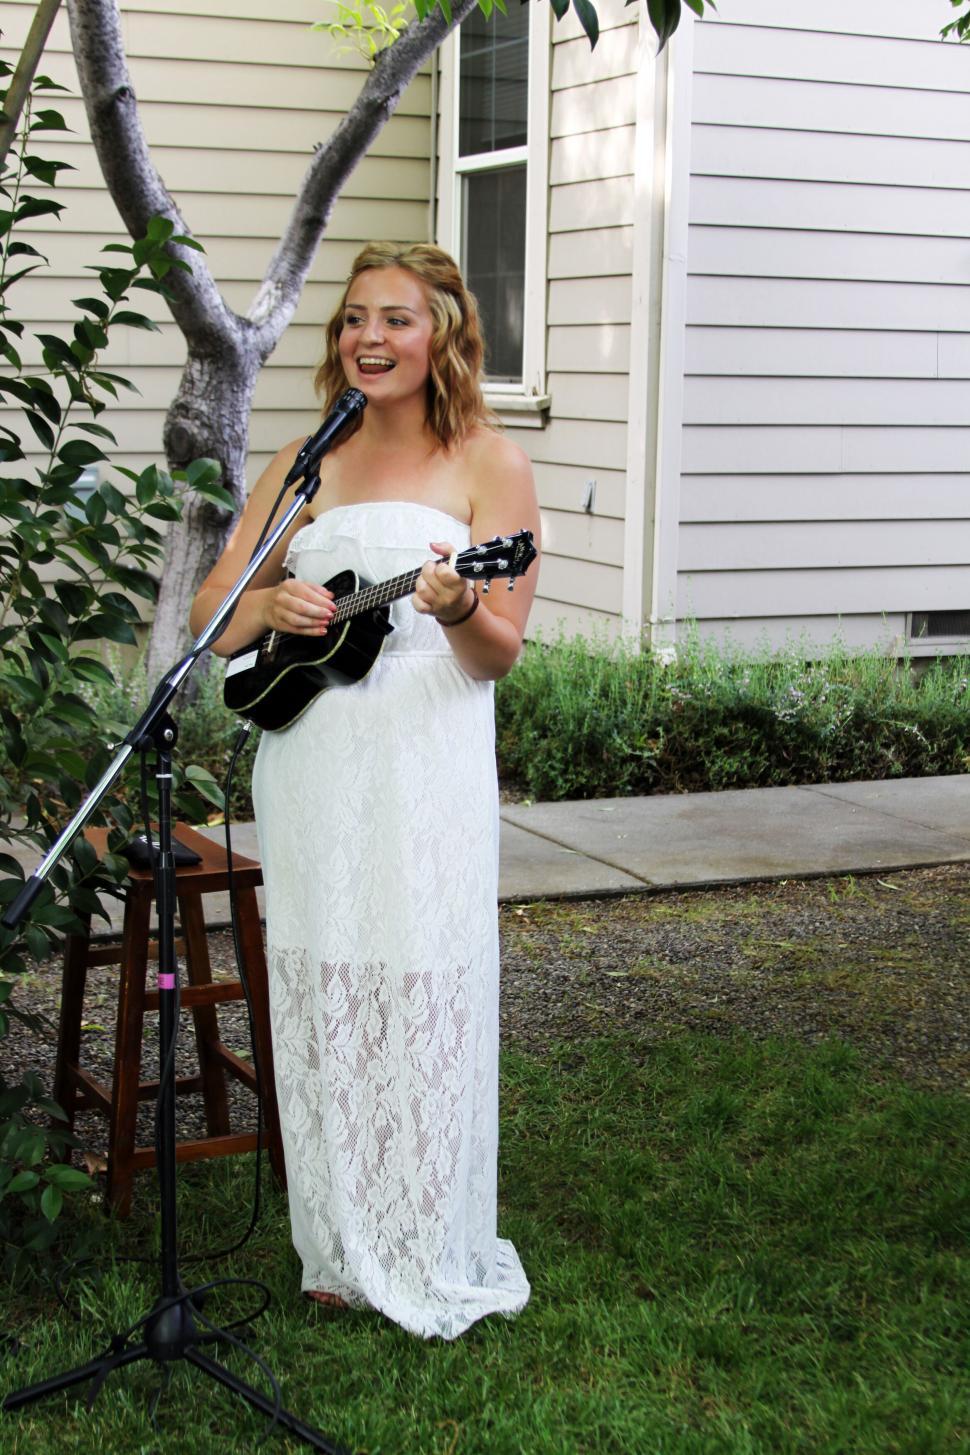 Free Image of Woman in white dress playing ukulele 